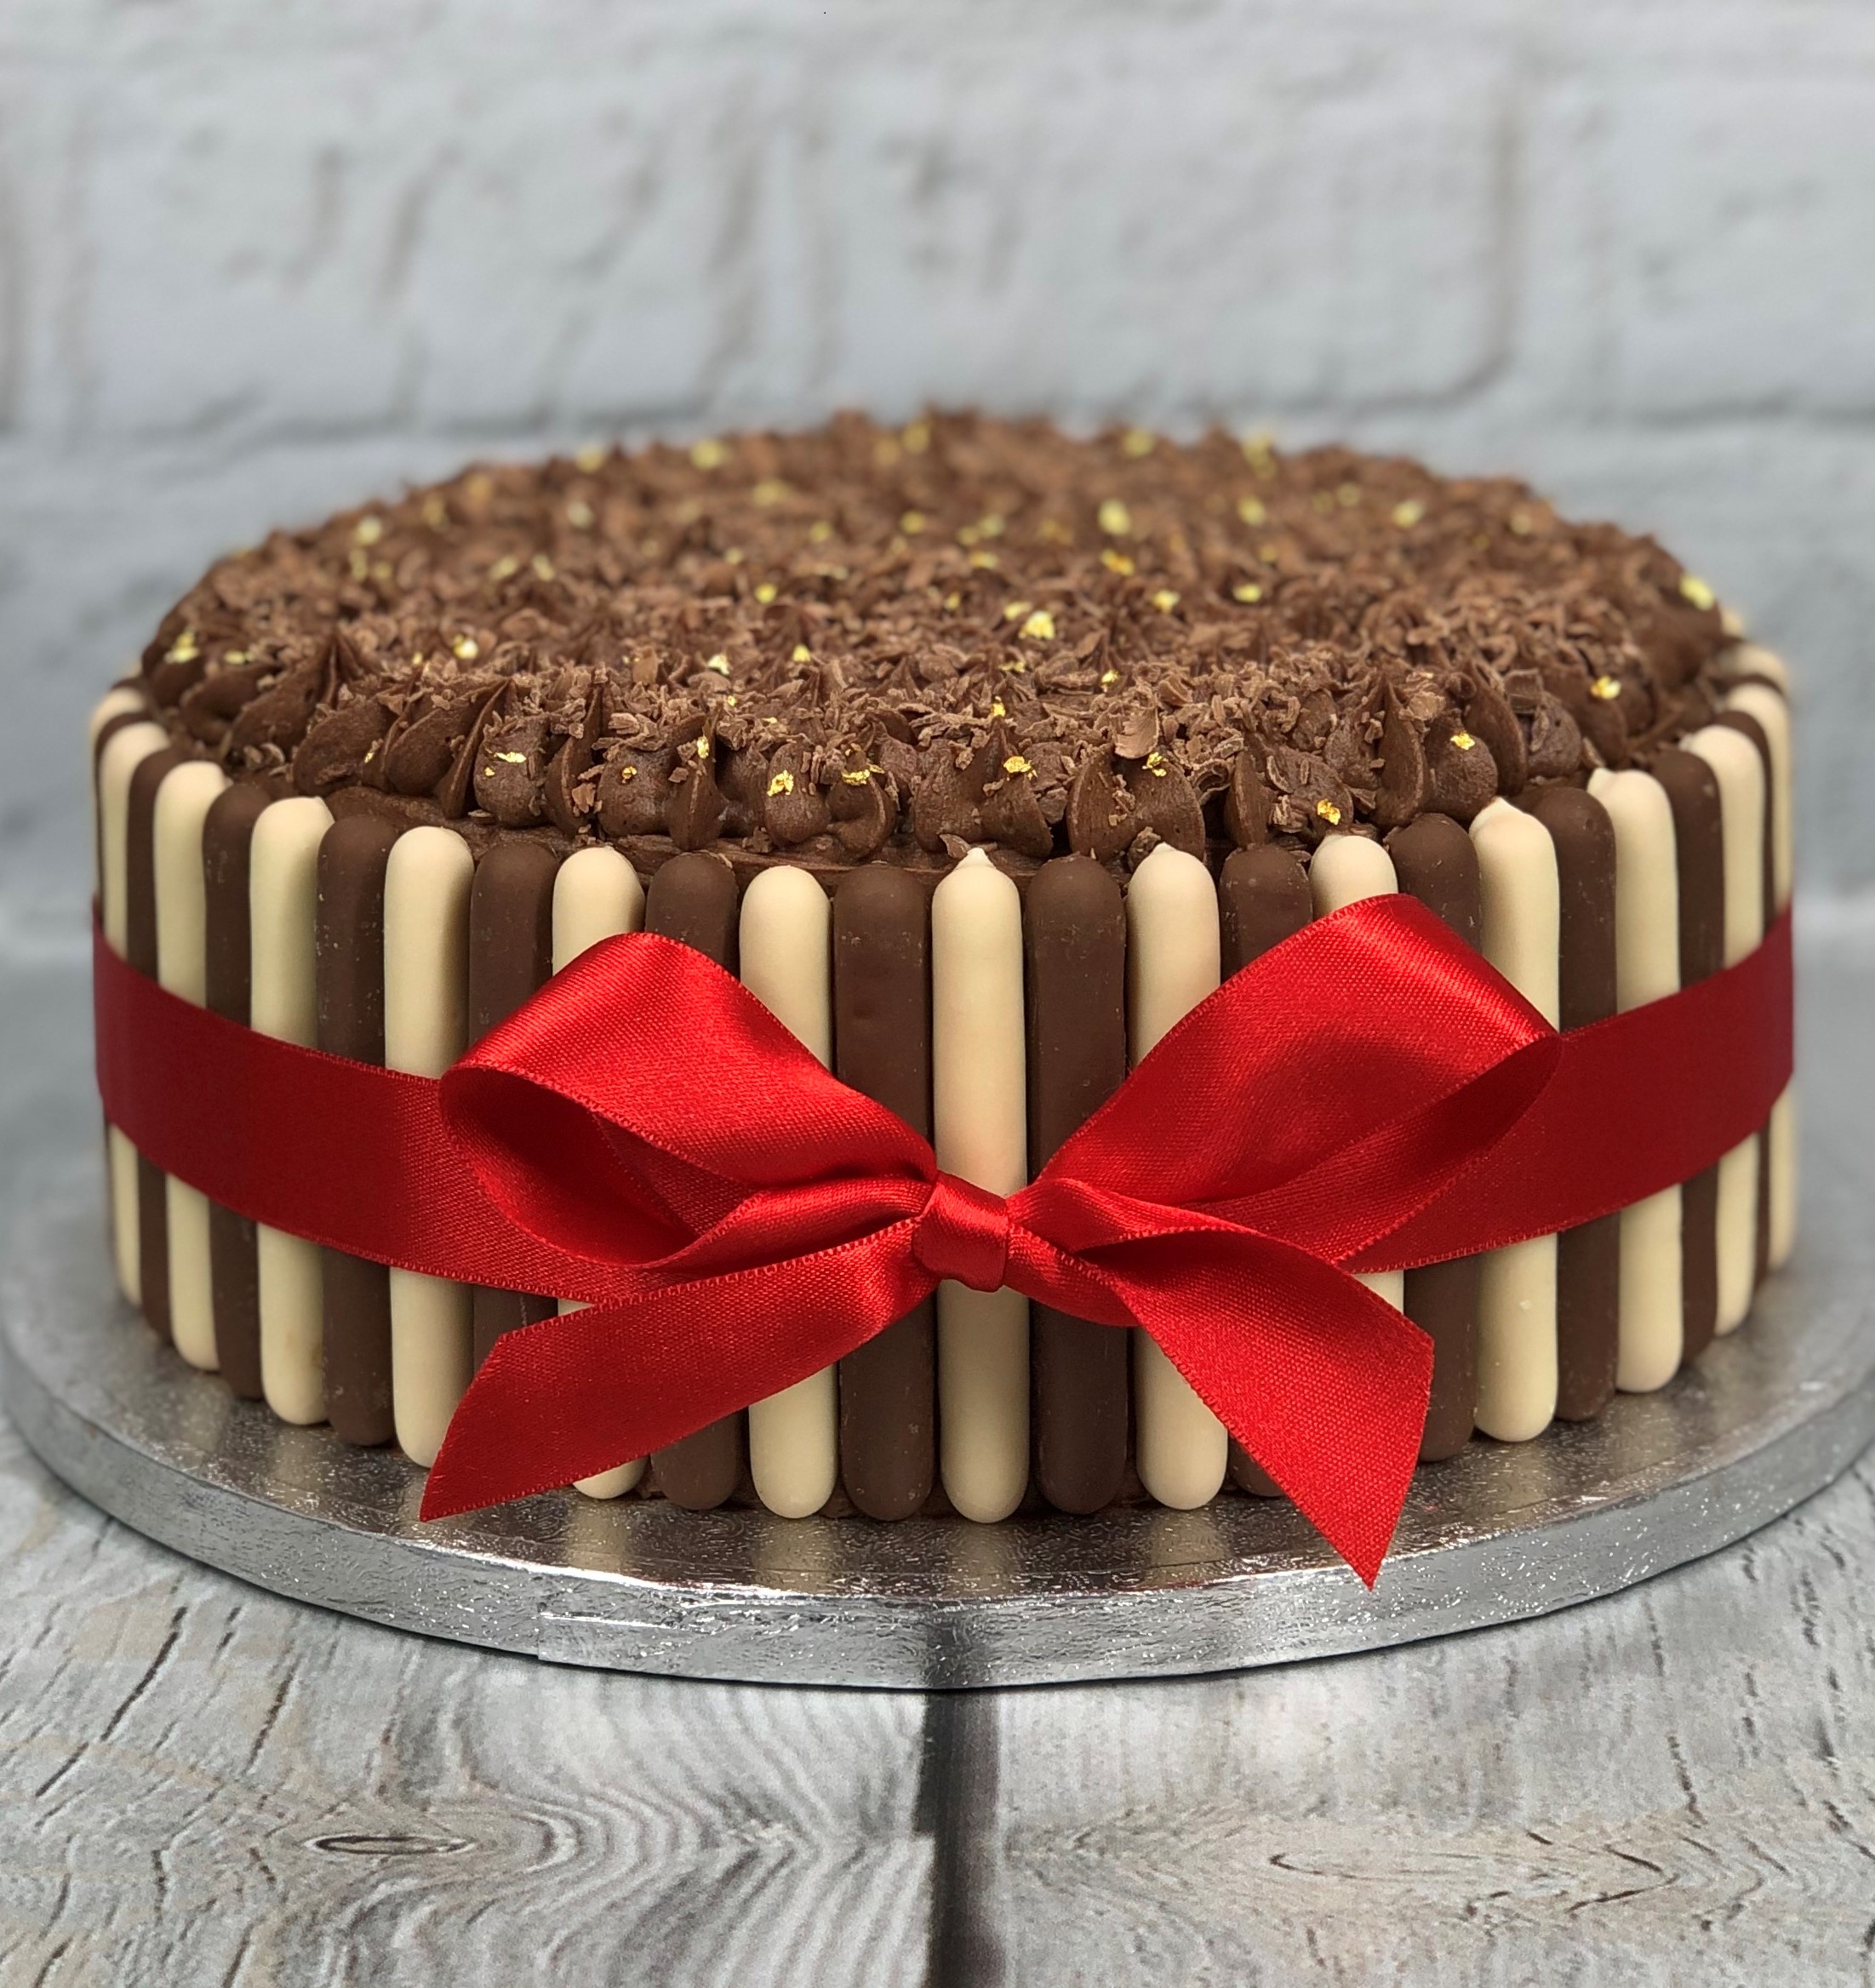 Good Vibes Bakery - Today's Bournville chocolate orange birthday cake 😍 |  Facebook